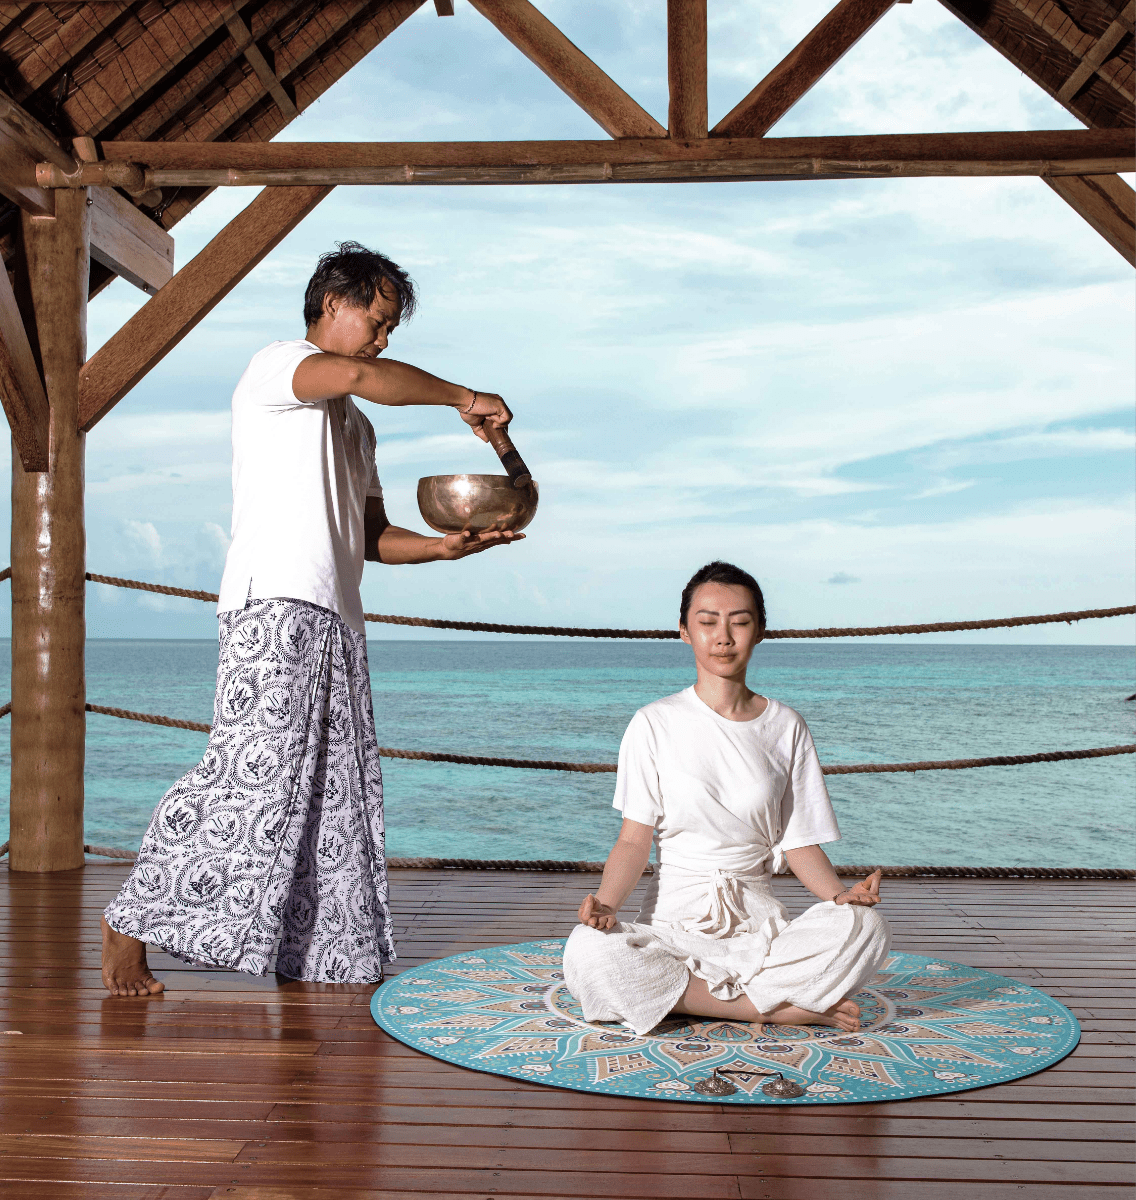 HR-woman-meditating-elang-wooden-deck-male-staff-holding-bowl-lagoon-behind-2